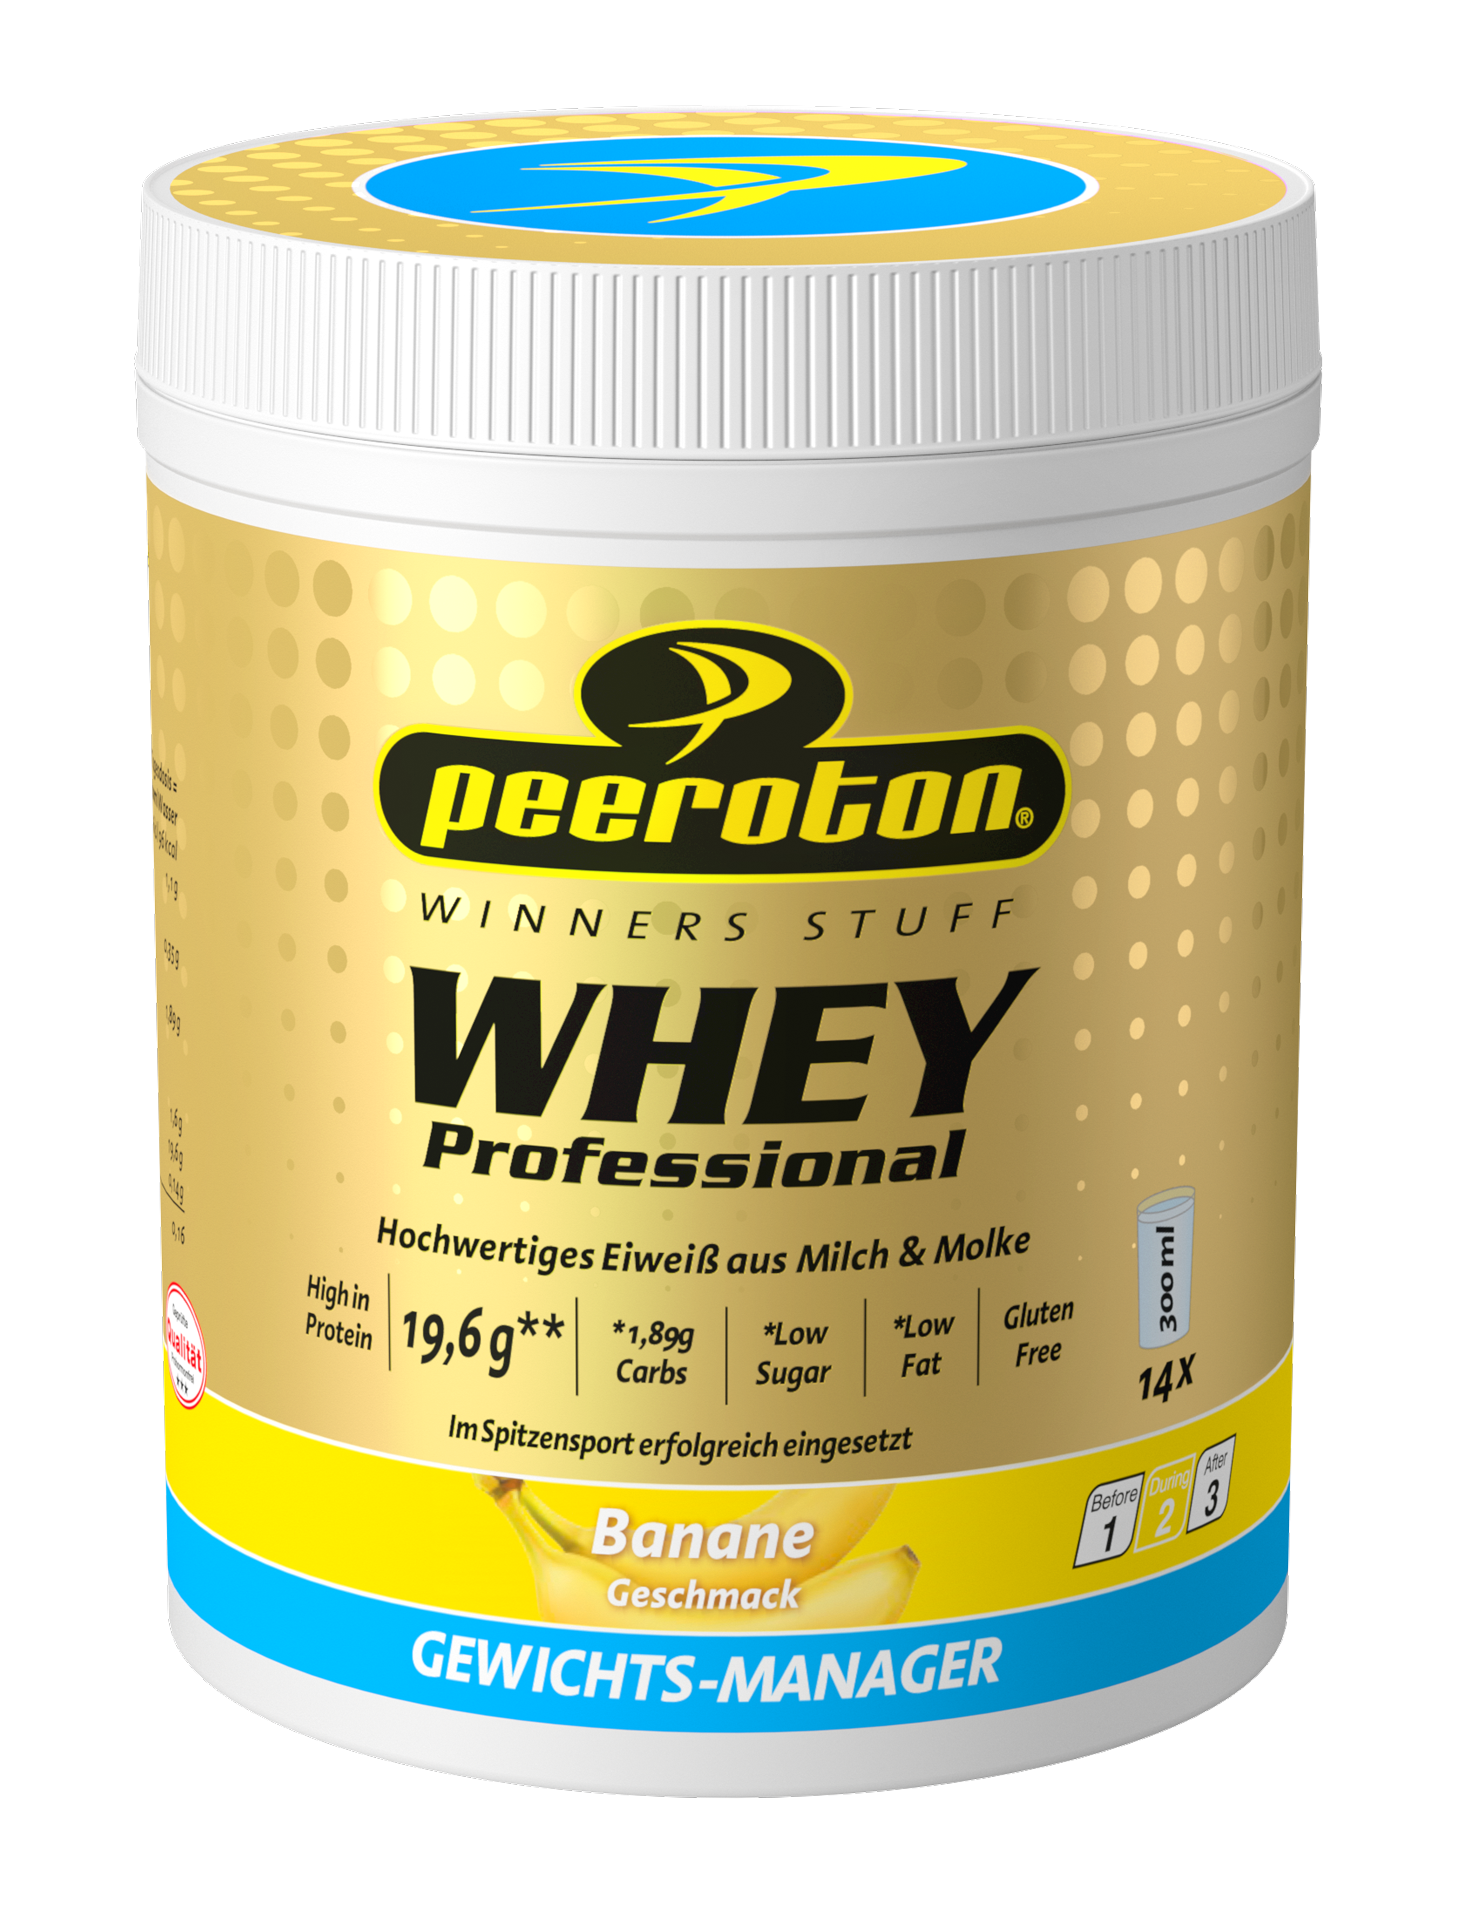 WHEY Professional Protein Shake 350g